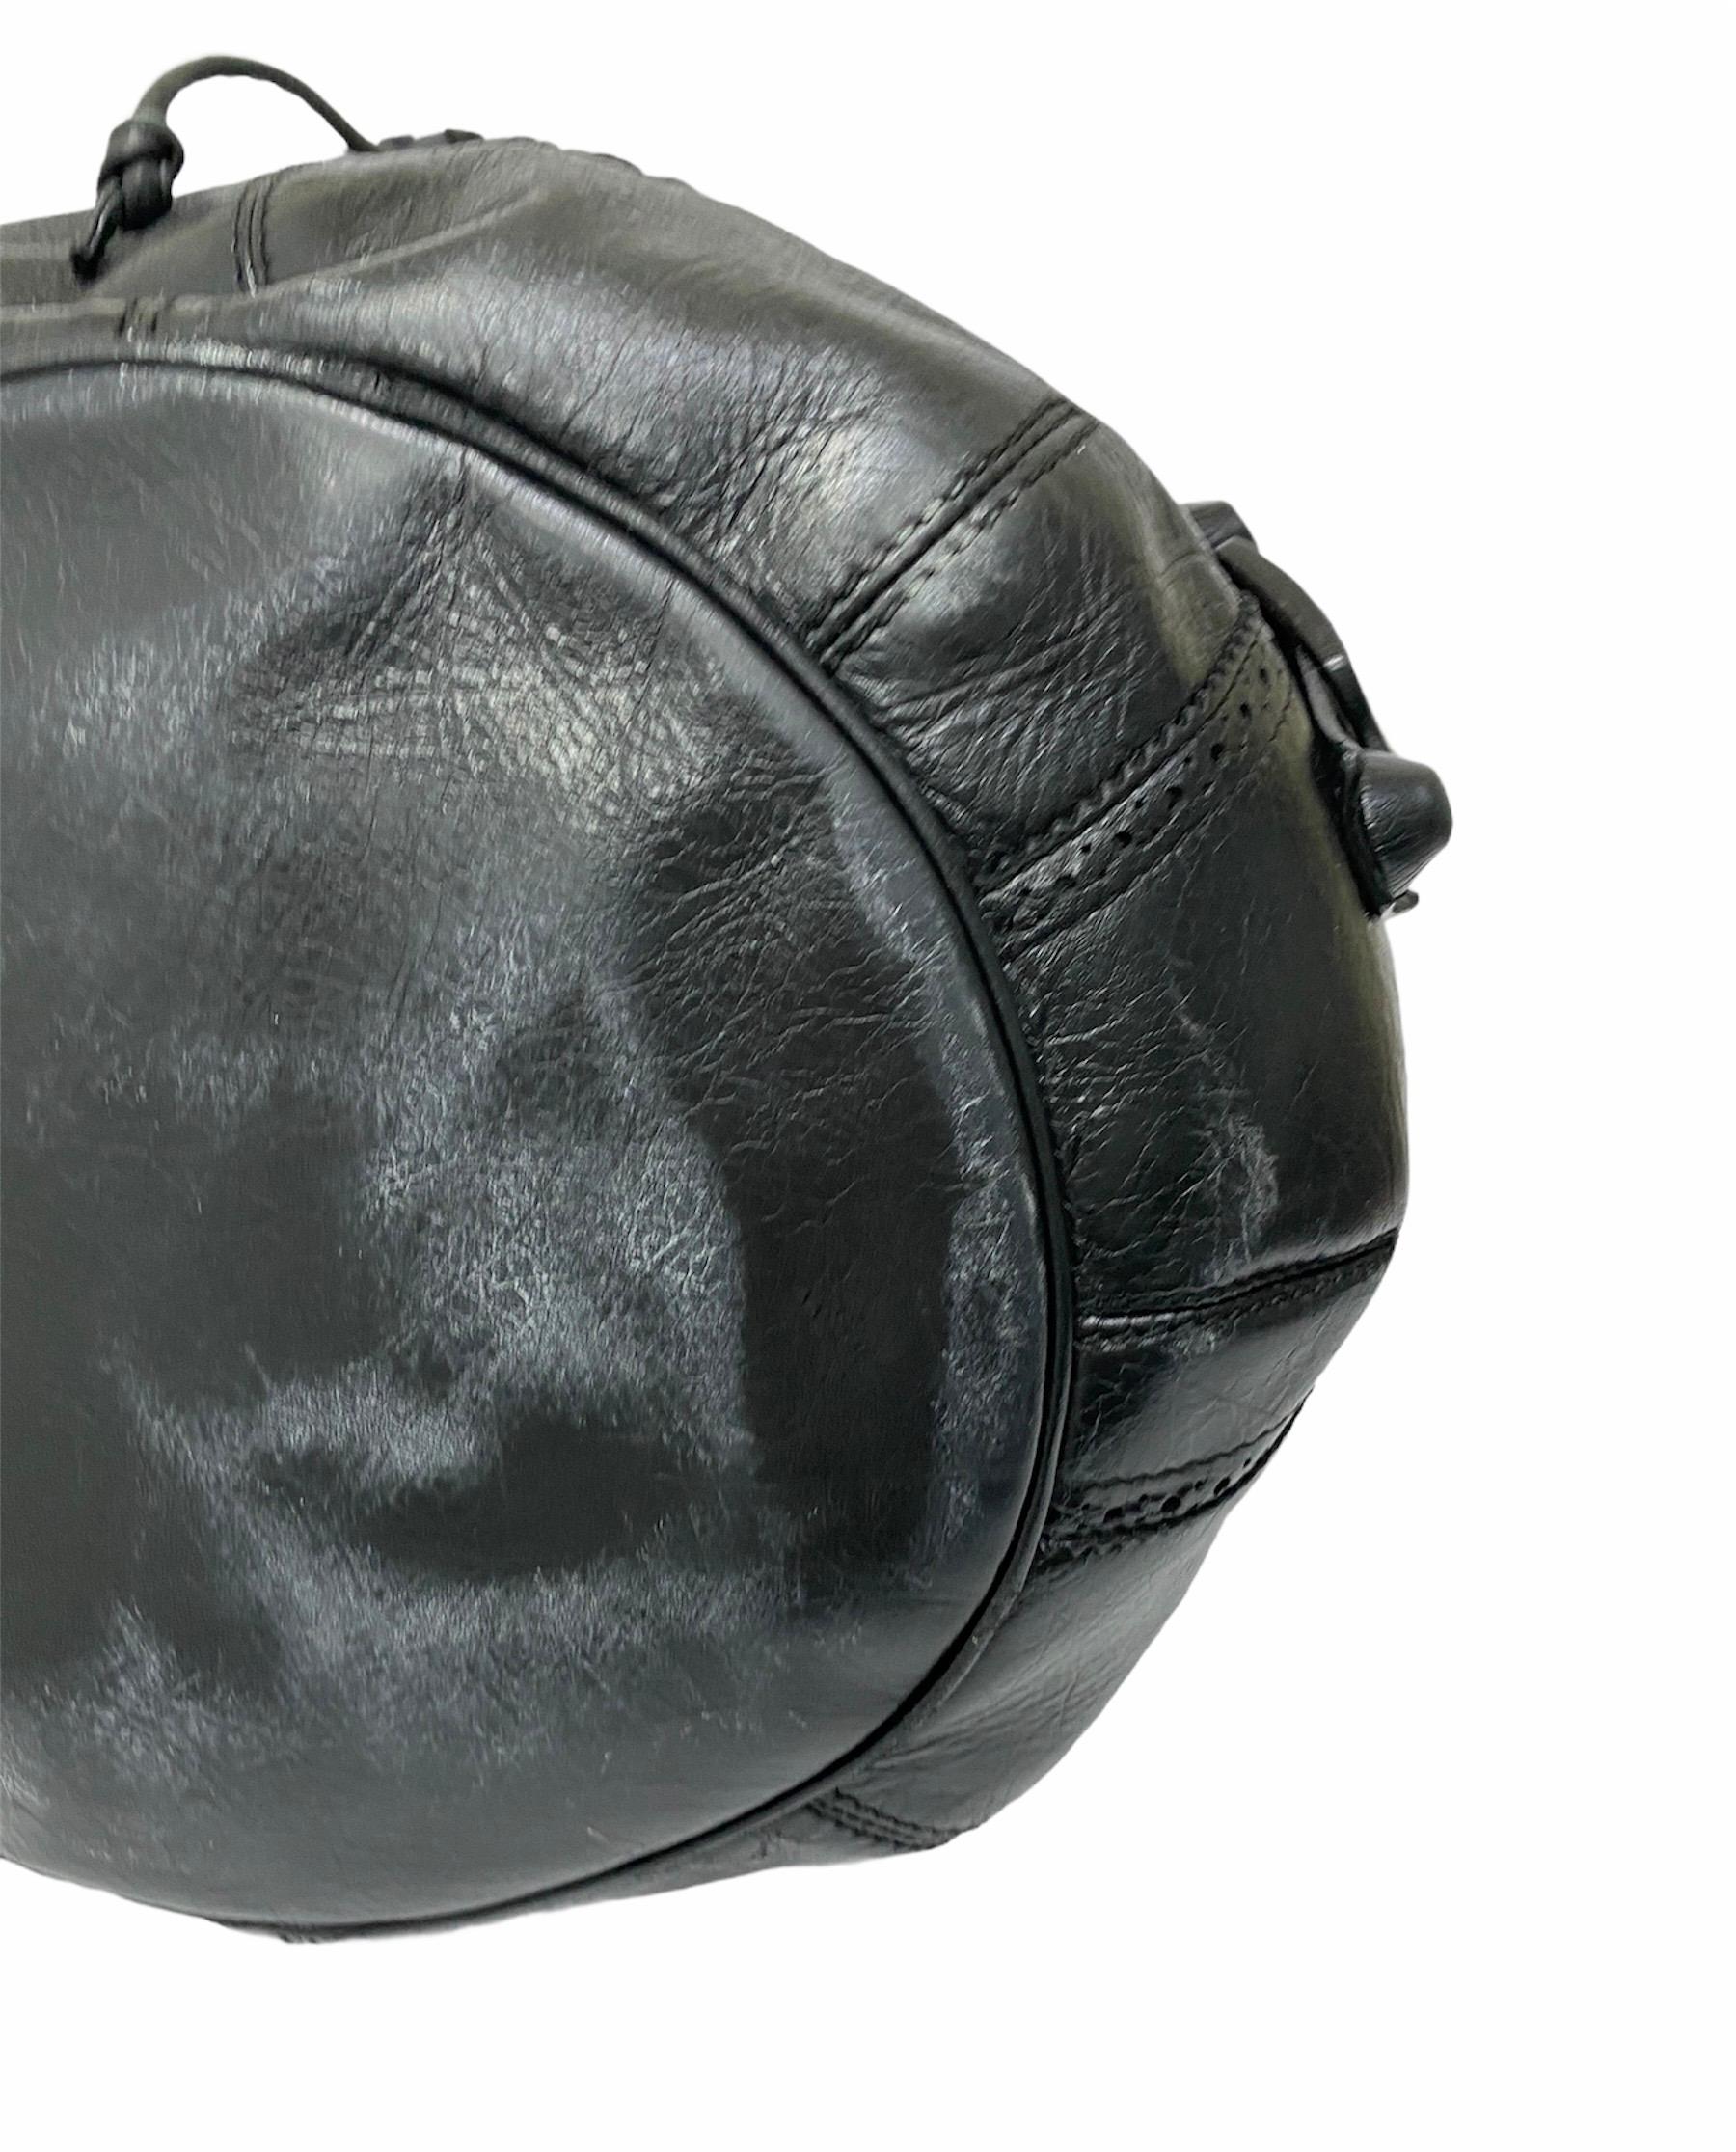 Women's Balenciaga Black Leather Bucket Bag with Silver Hardware